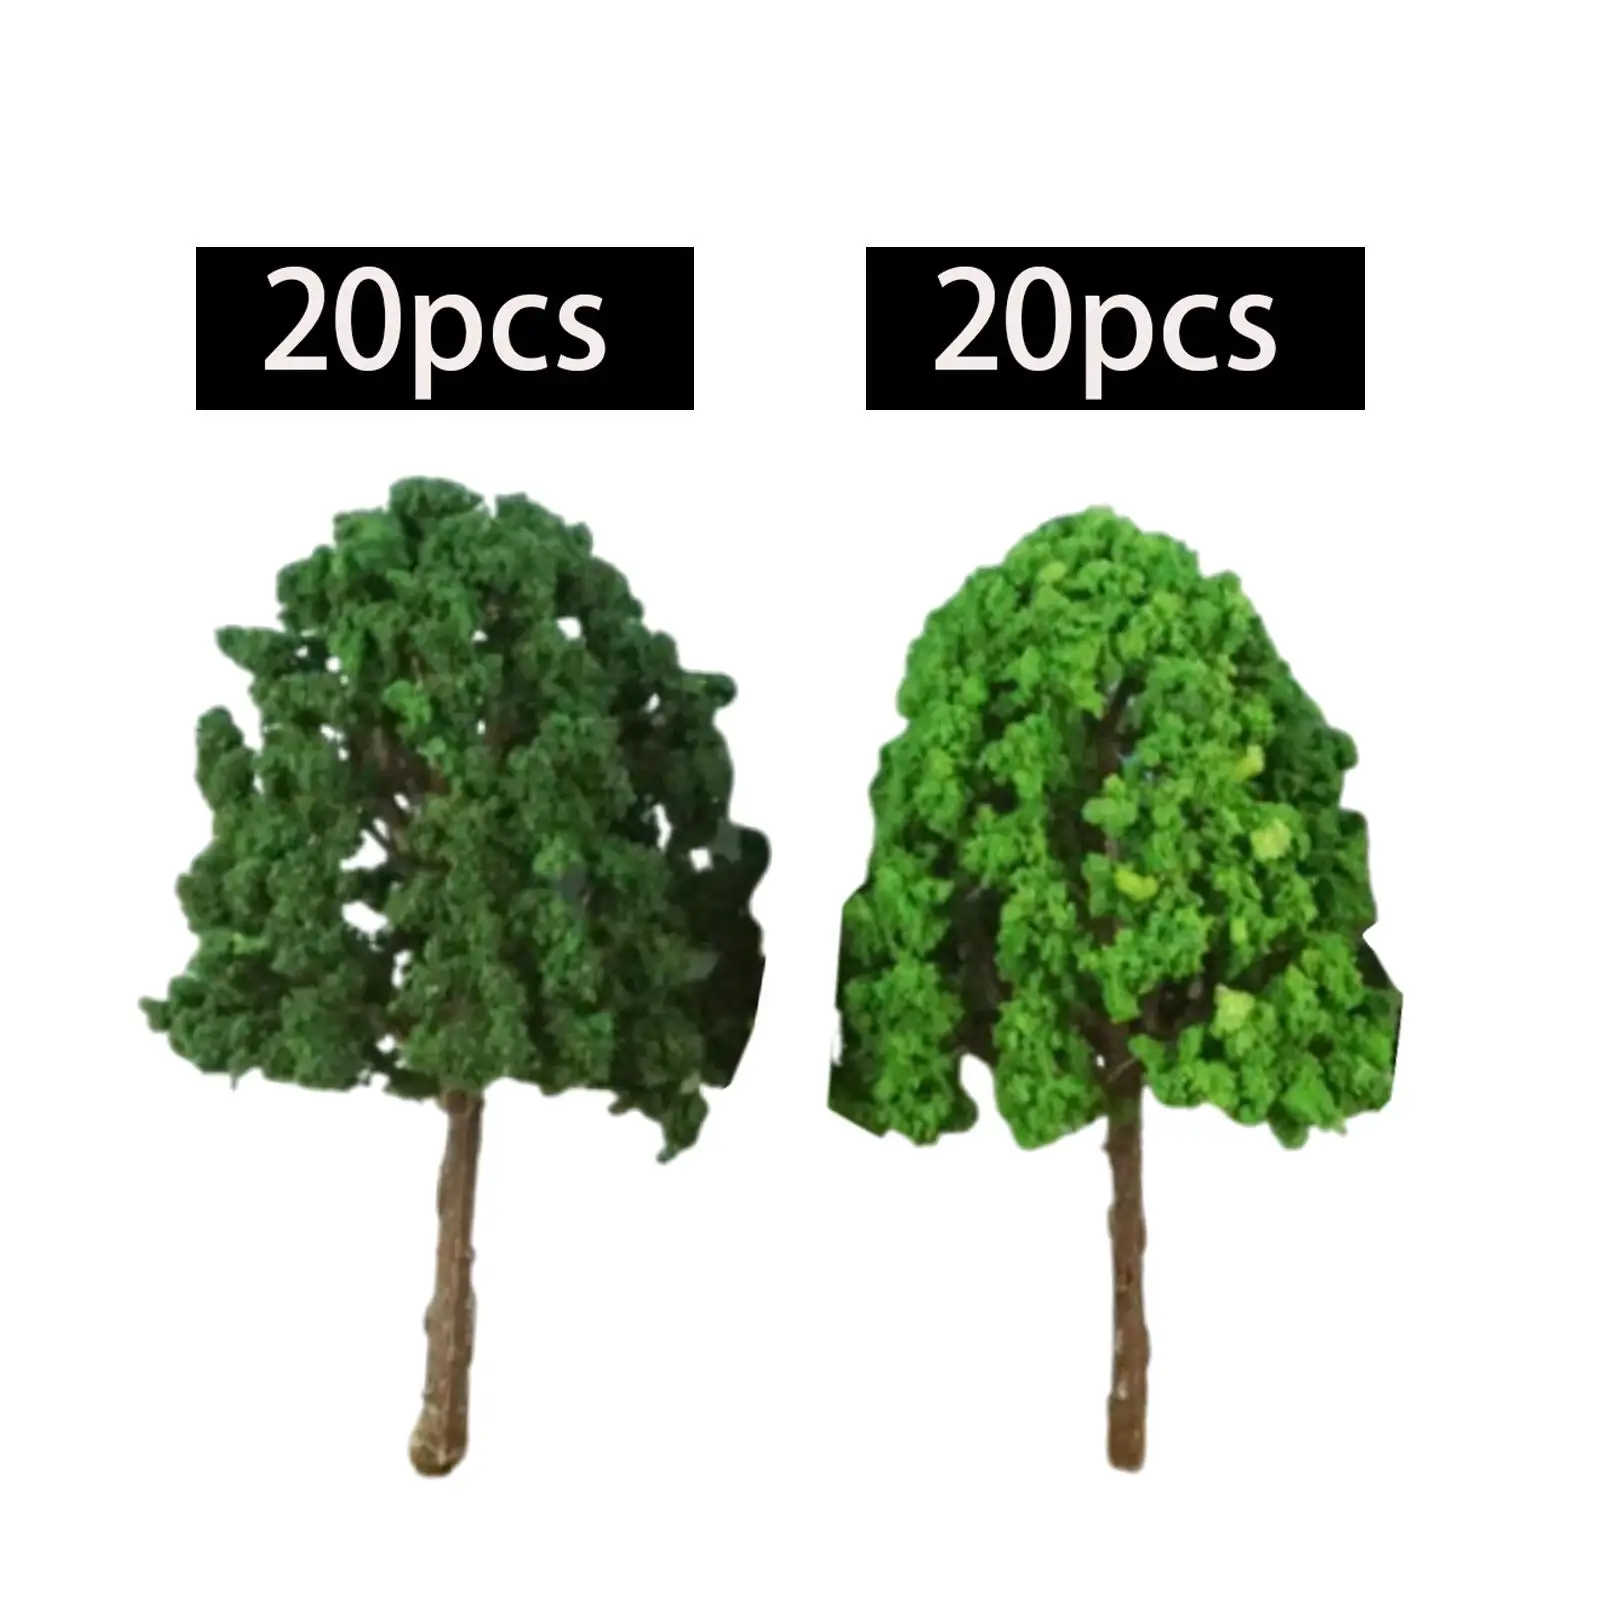 20Pcs Model Trees Miniature Trees Train Scenery Architecture Trees Diorama Supplies for Railway